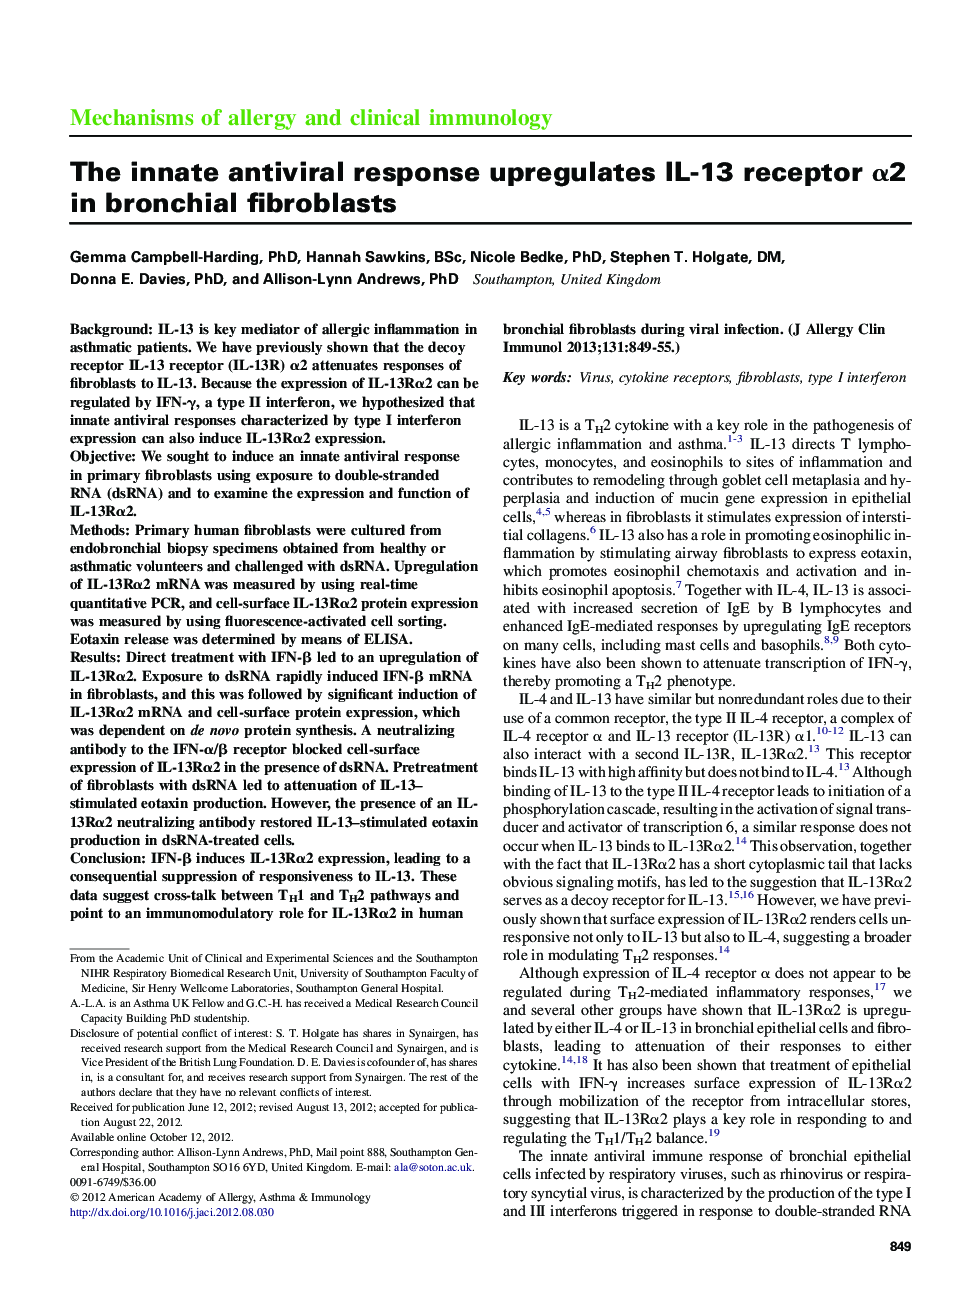 The innate antiviral response upregulates IL-13 receptor Î±2 in bronchial fibroblasts